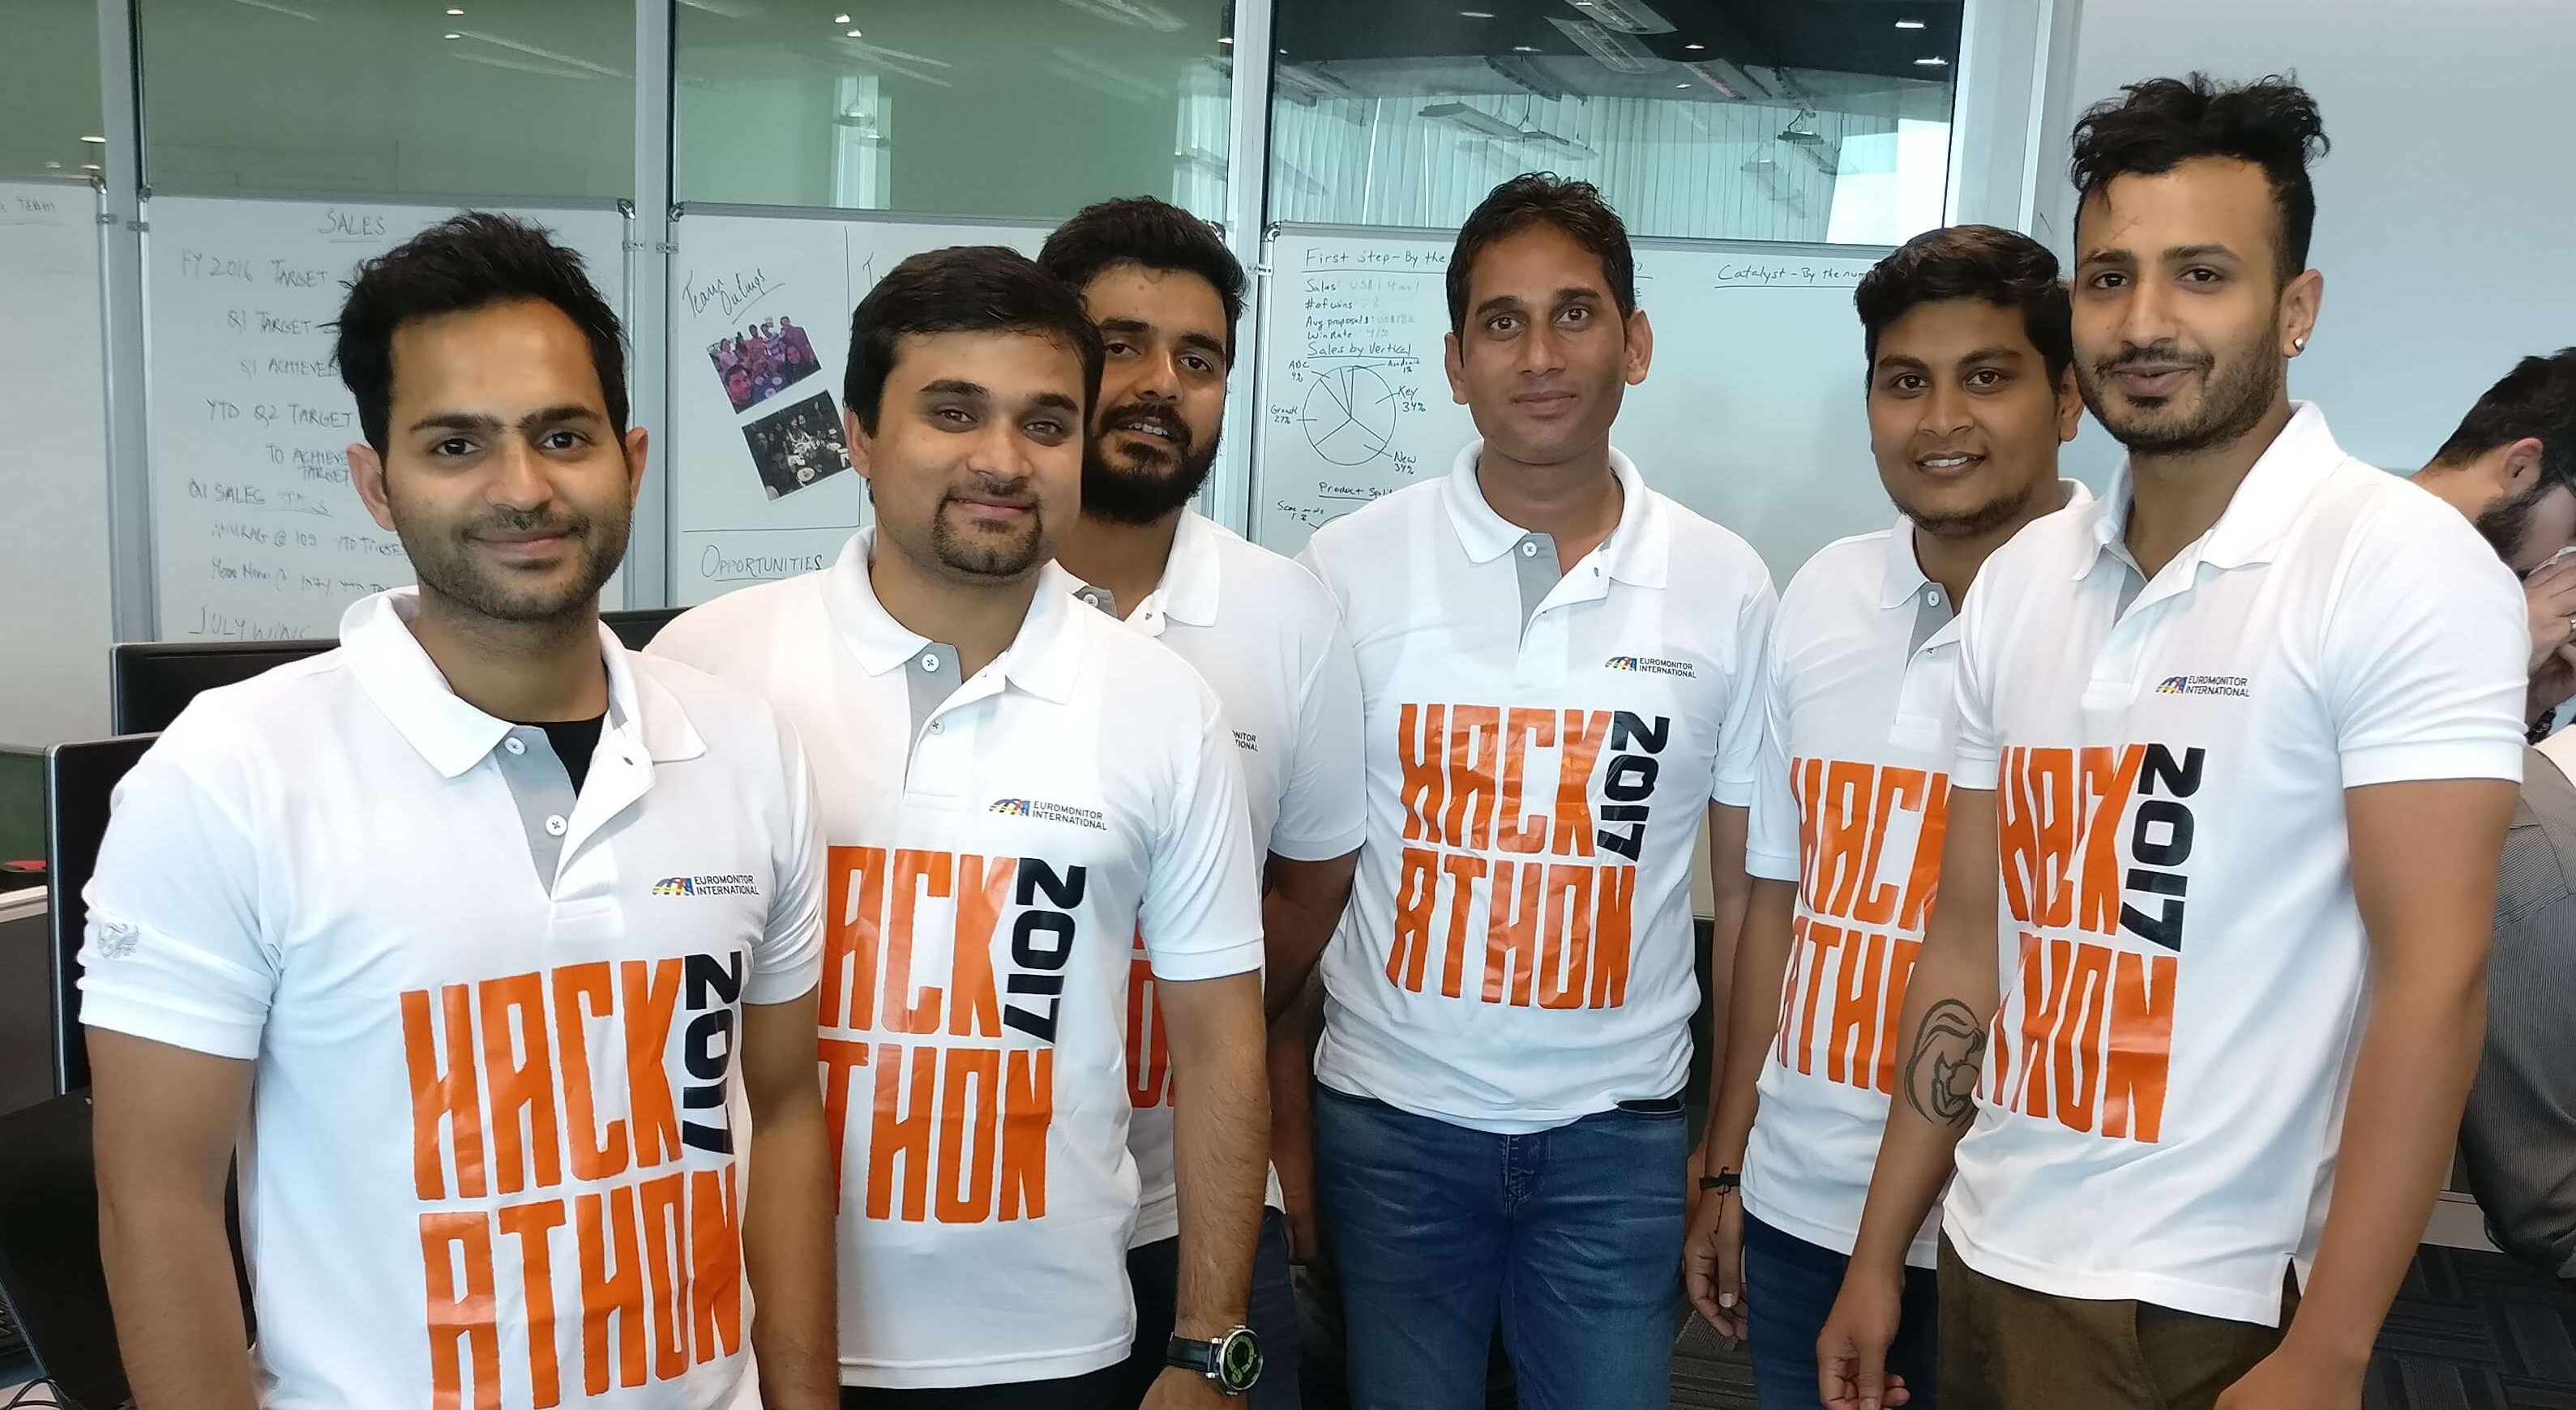 Euromonitor technology team in Bangalore sporting Hackathon 2017 shirts